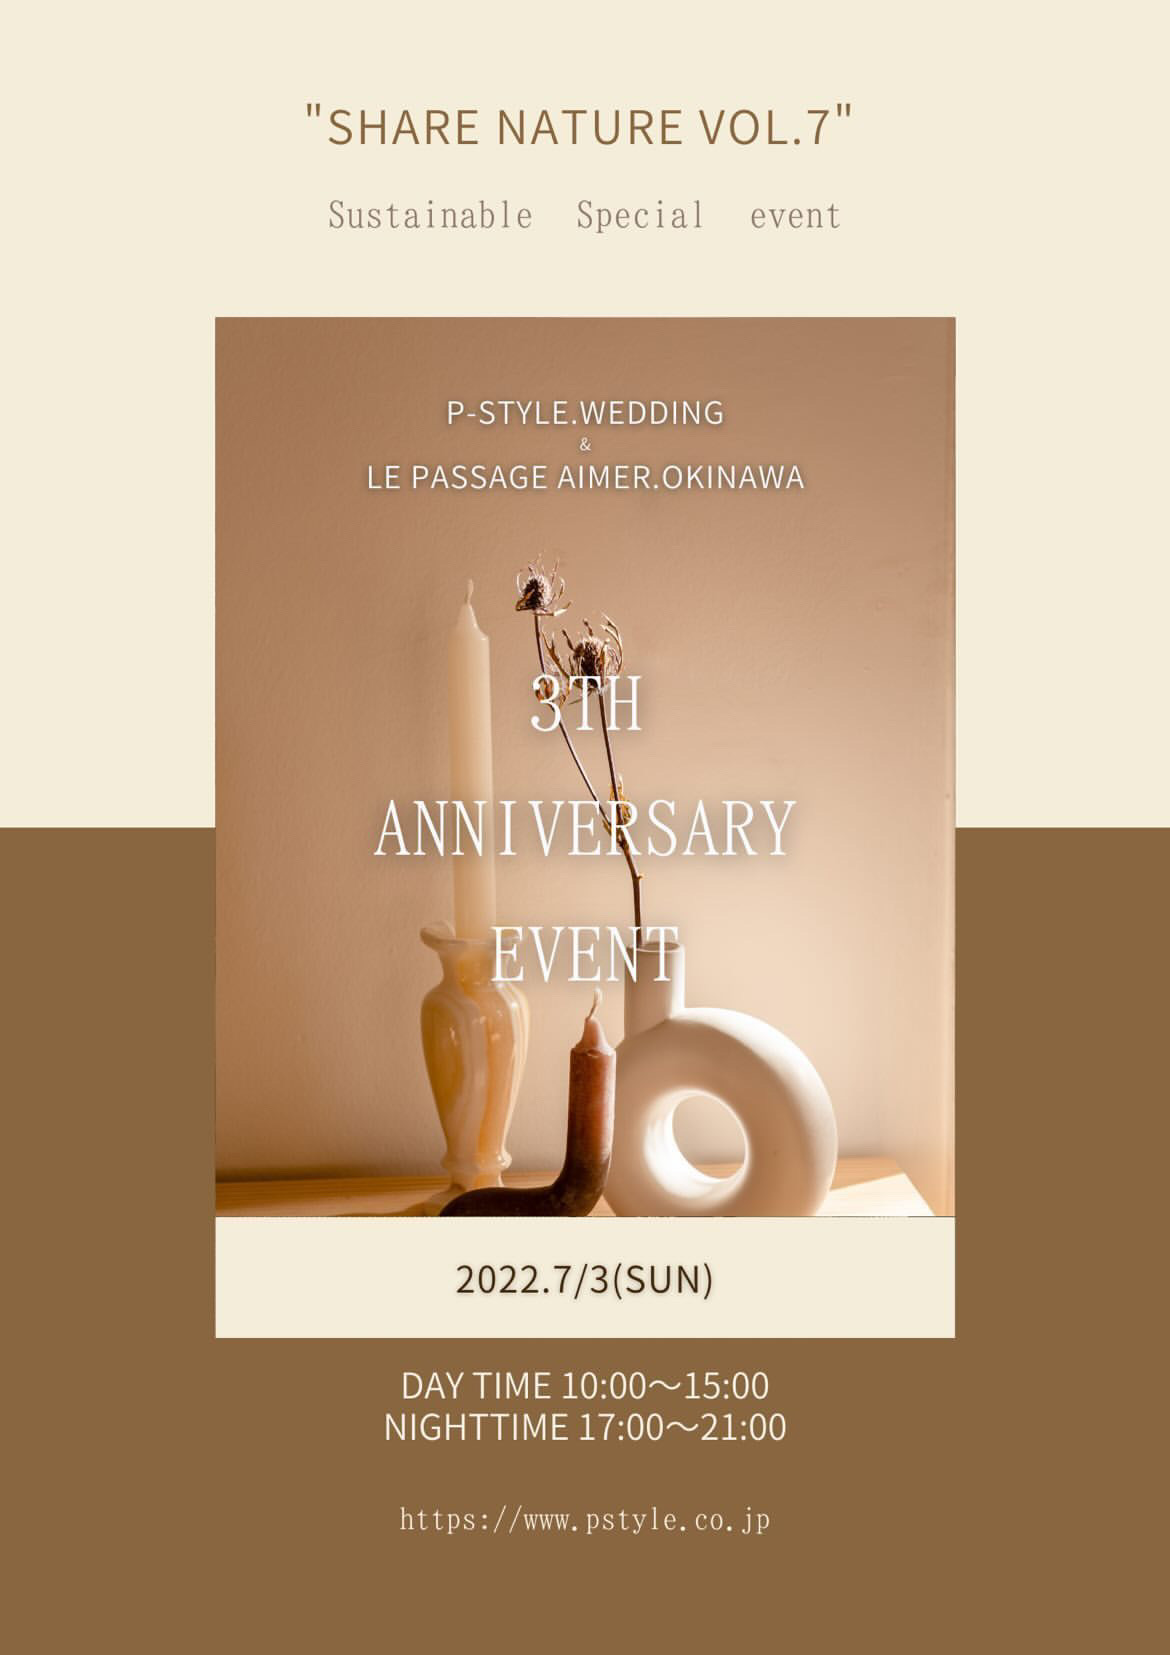 Le Passage aimer.okinawa&P-stylewedding沖縄3周年イベントのお知らせ。